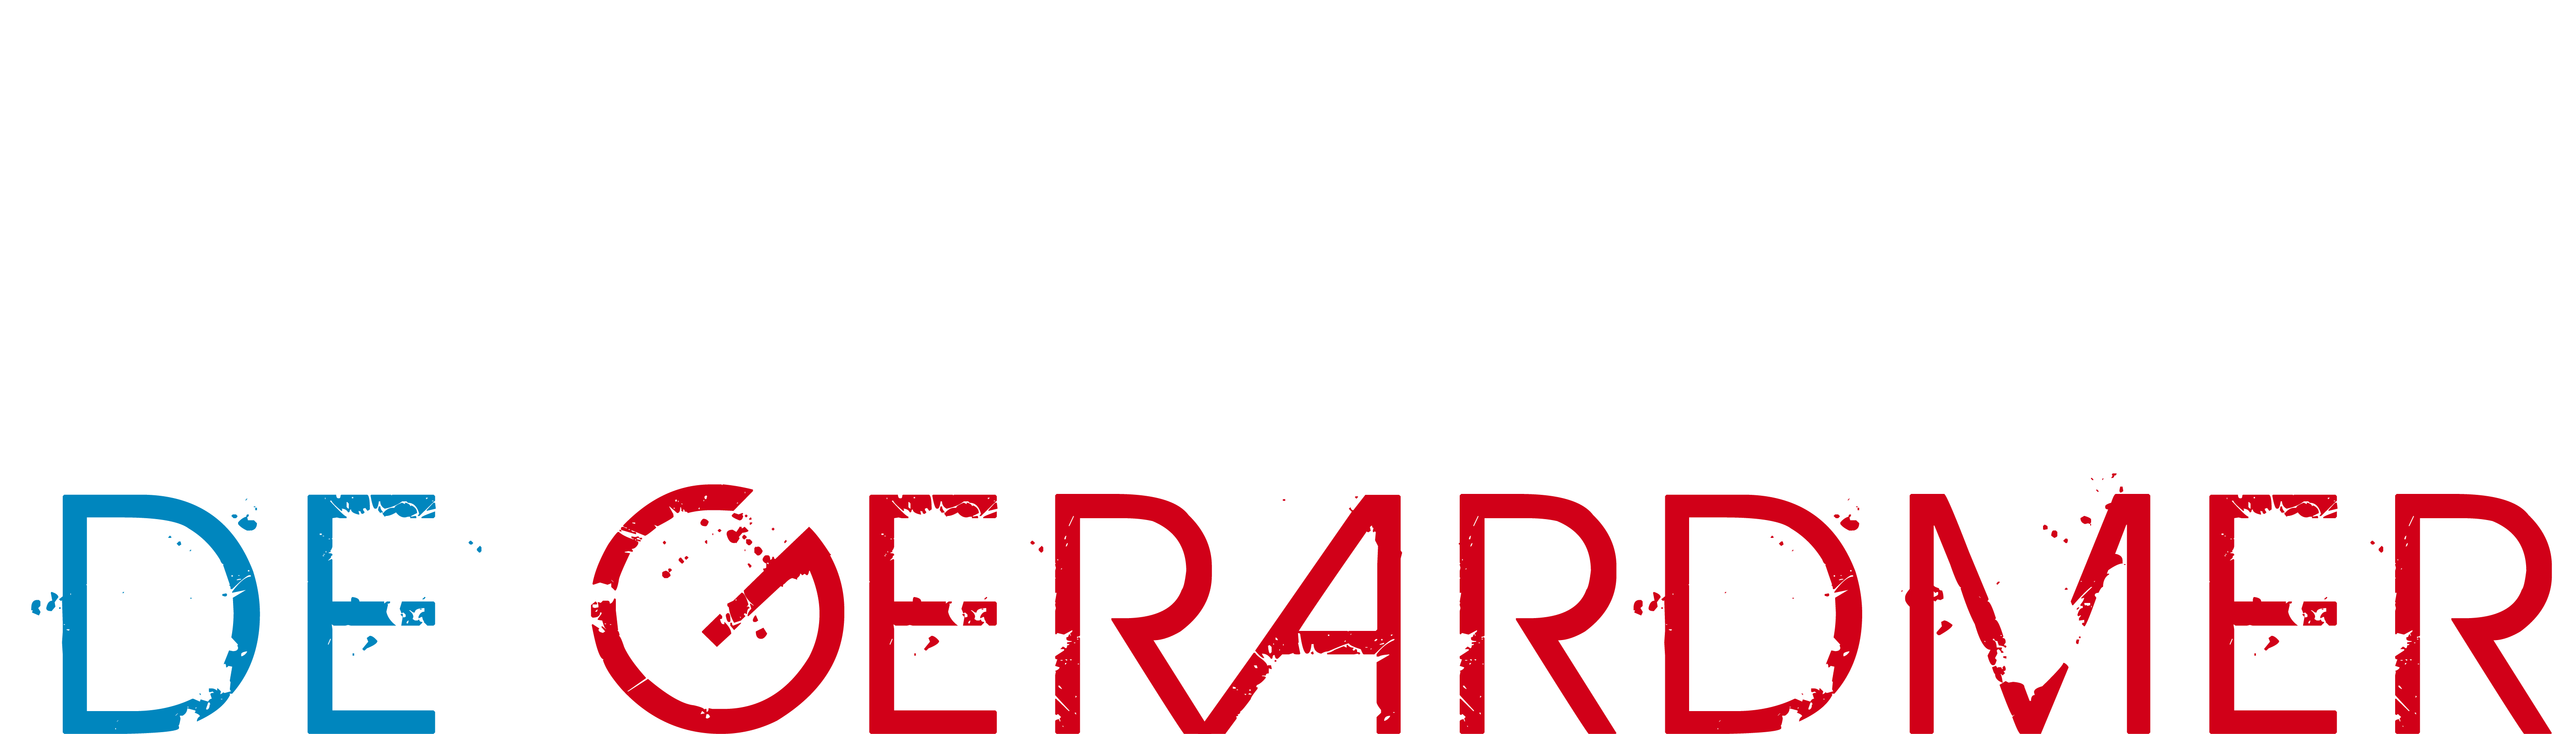 Logo Triathlon vecto titre blanc